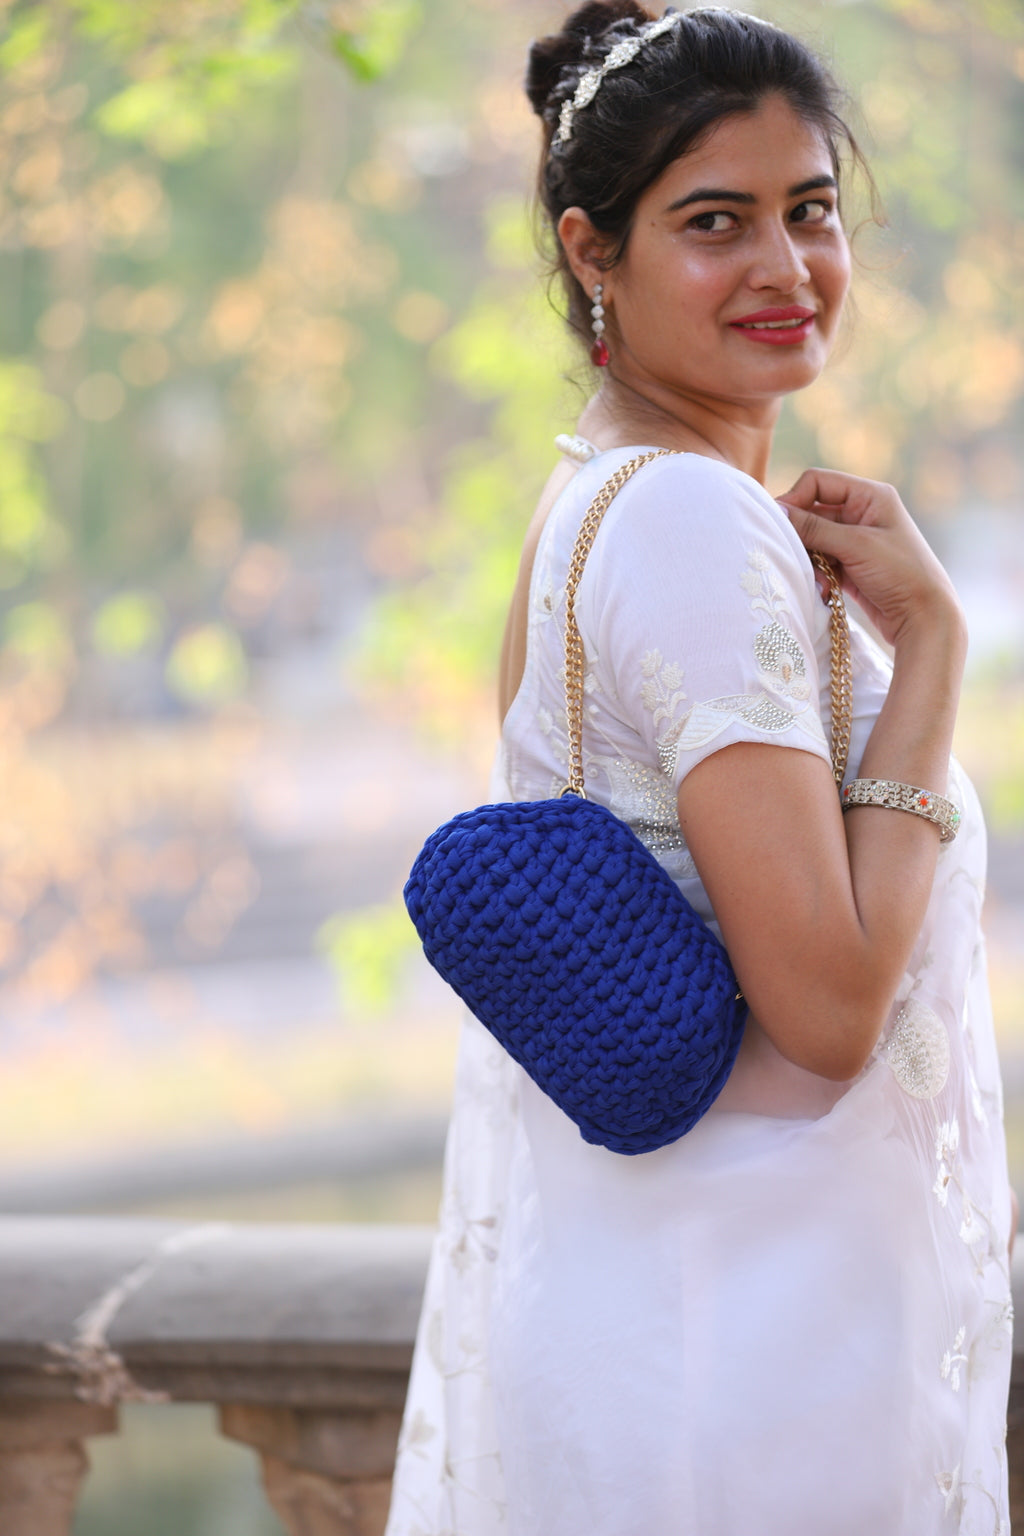 Handmade Royal Blue Crochet Bag